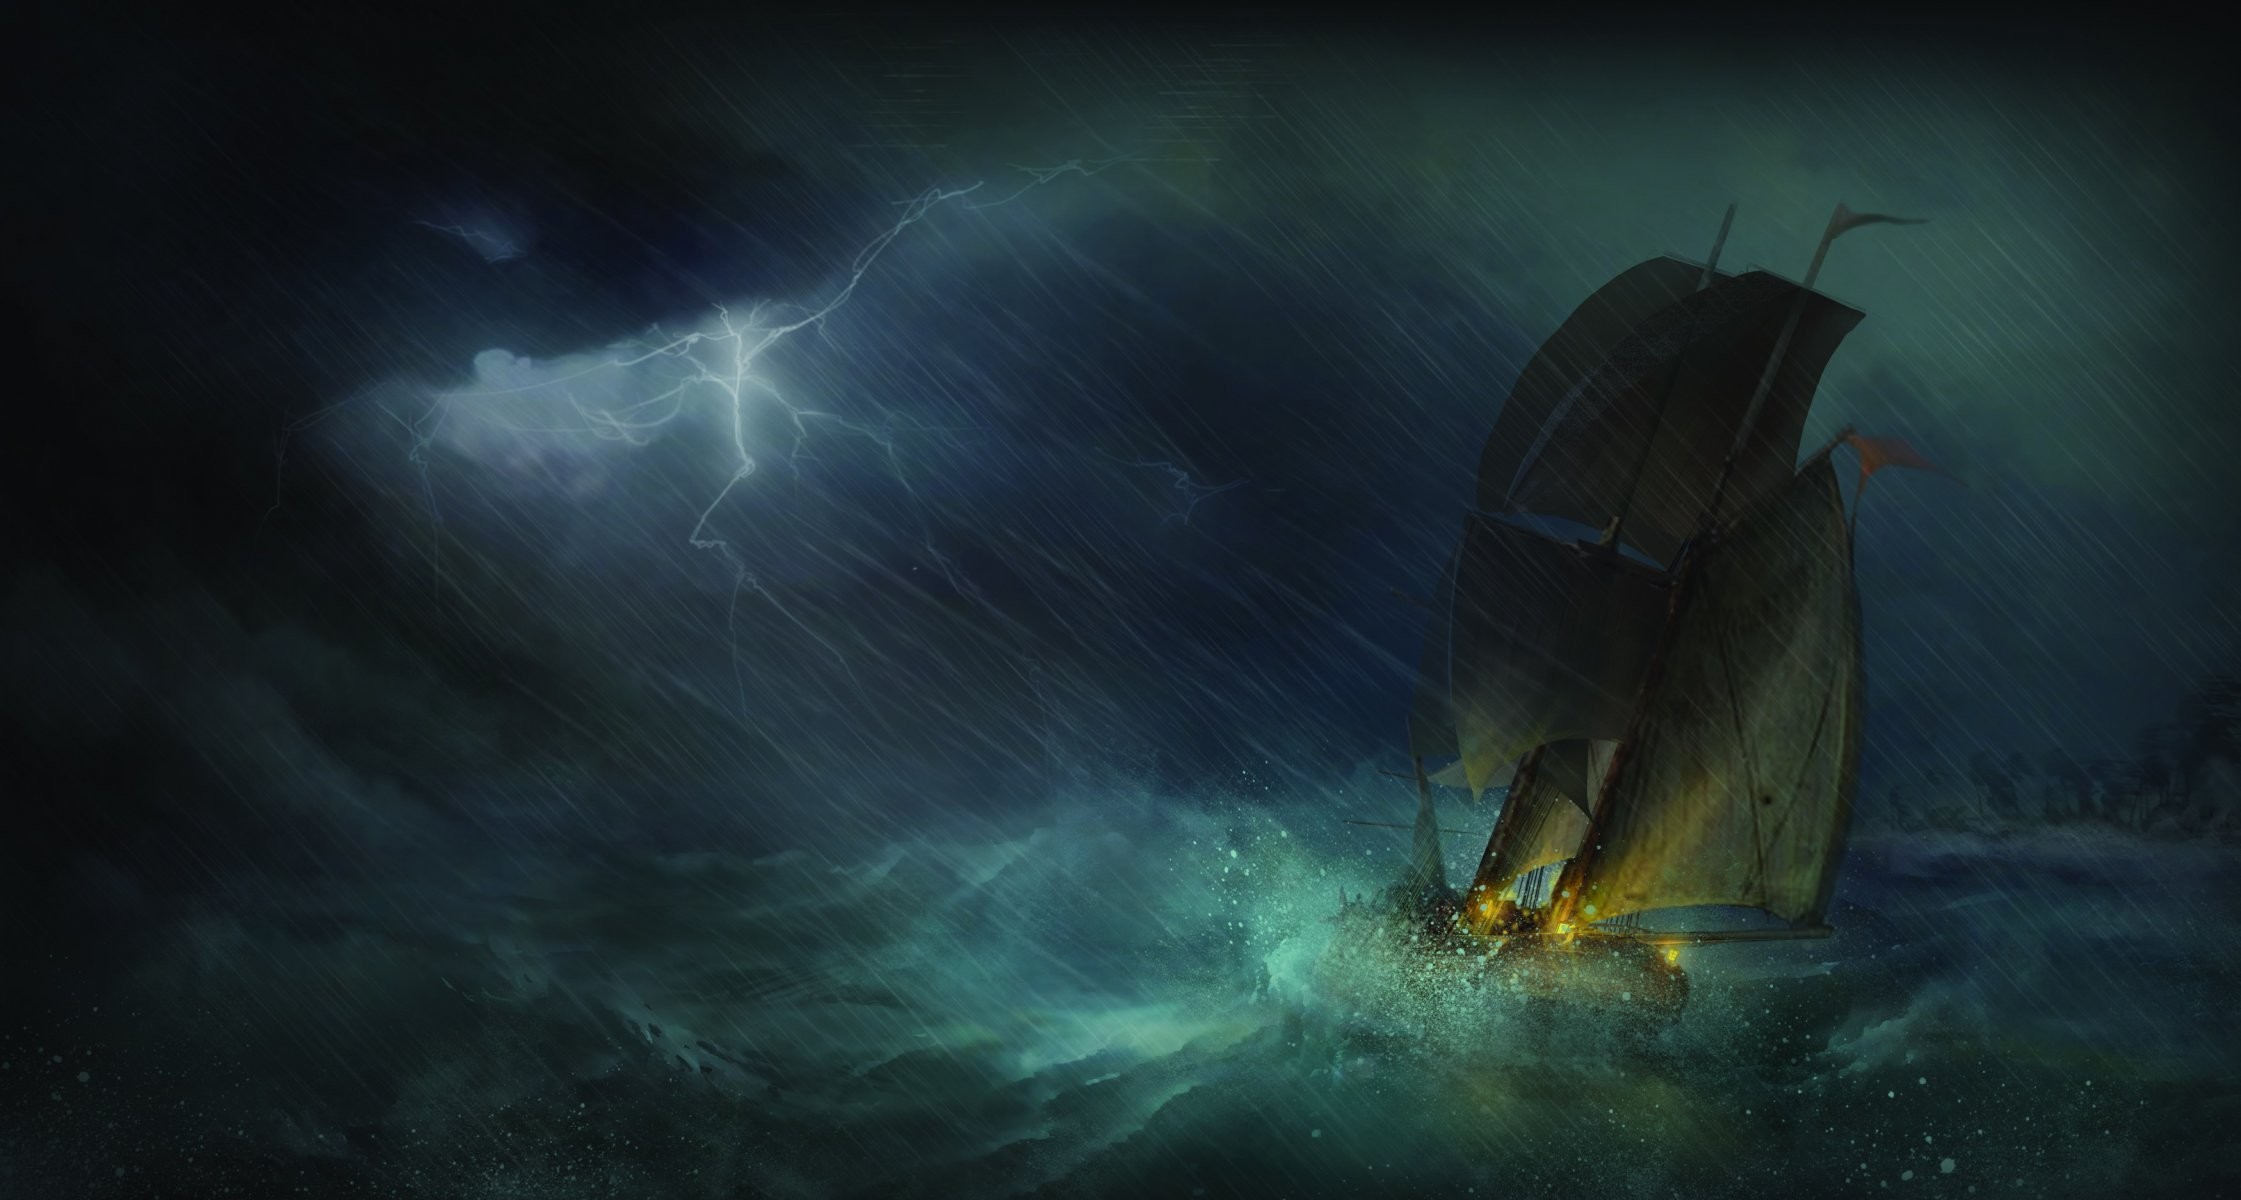 2241x1200 assassin's creed iii night ship sea naval tropicalstorm storm the storm rain